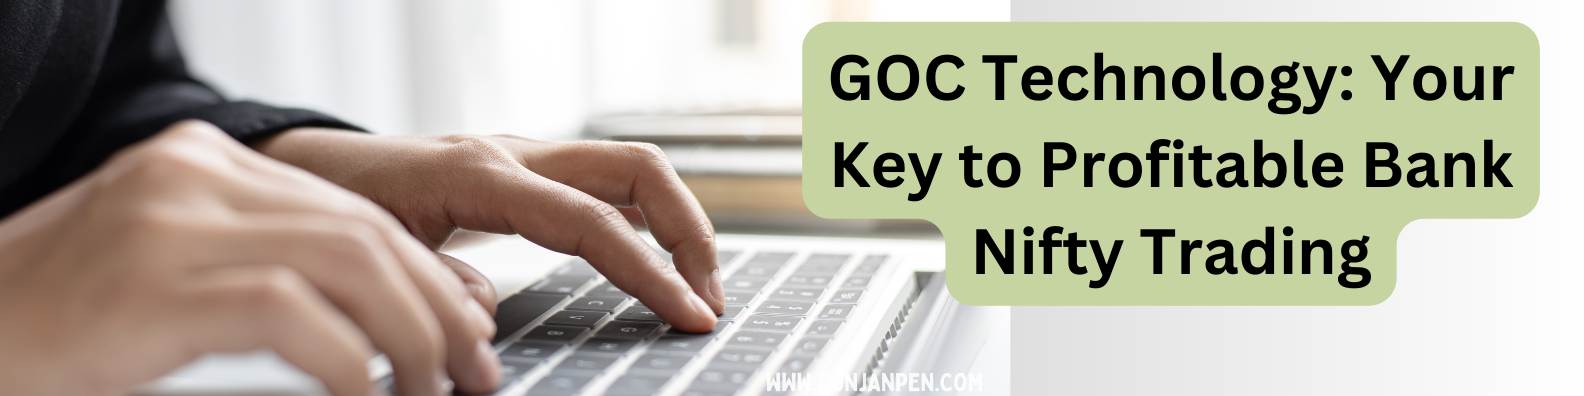 GOC Technology: Your Key to Profitable Bank Nifty Trading